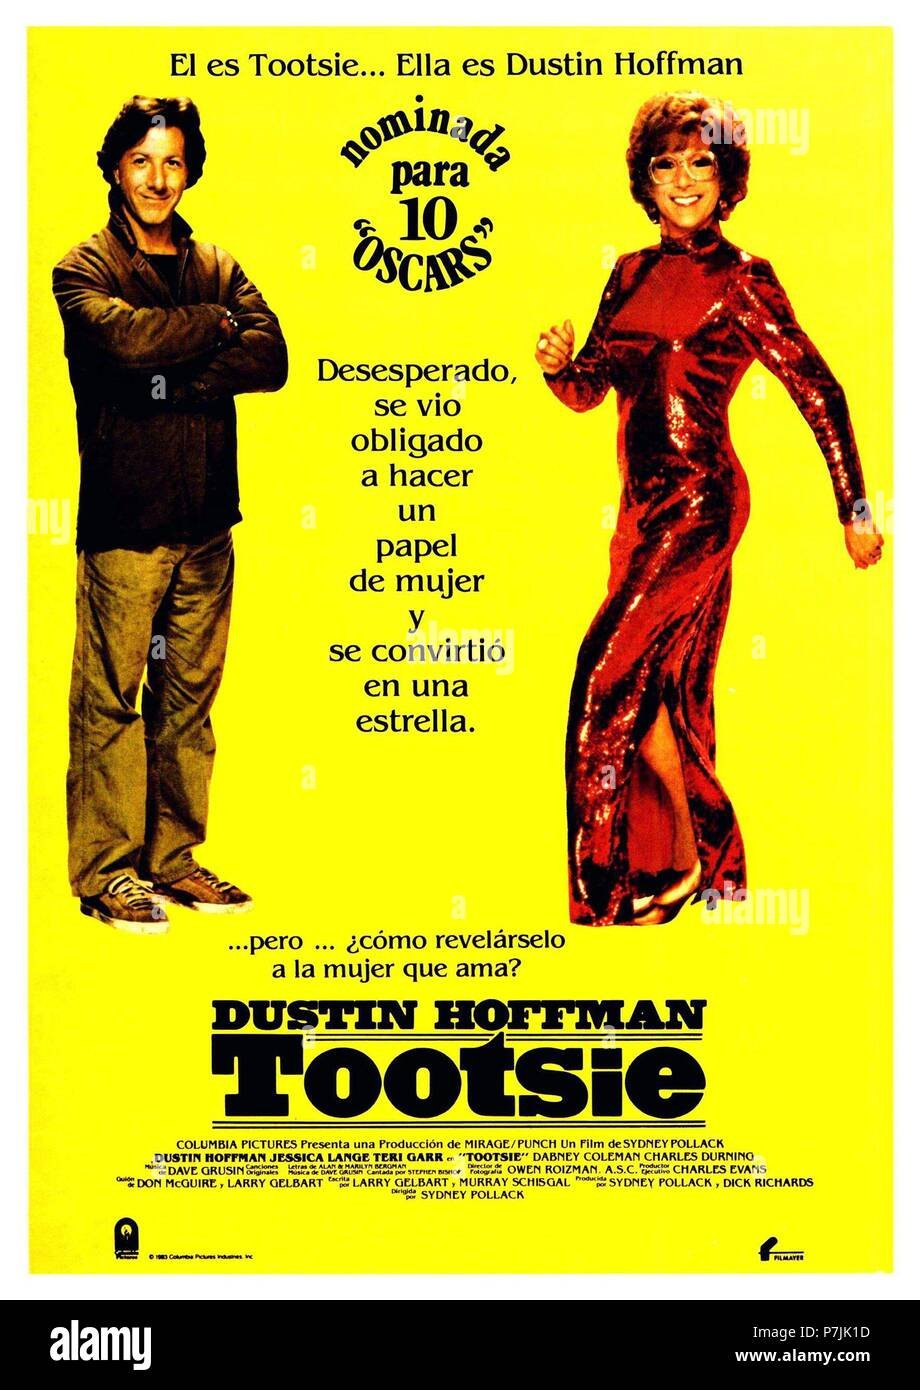 original-film-title-tootsie-english-title-tootsie-film-director-sydney-pollack-year-1982-credit-columbia-pictures-album-P7JK1D.jpg